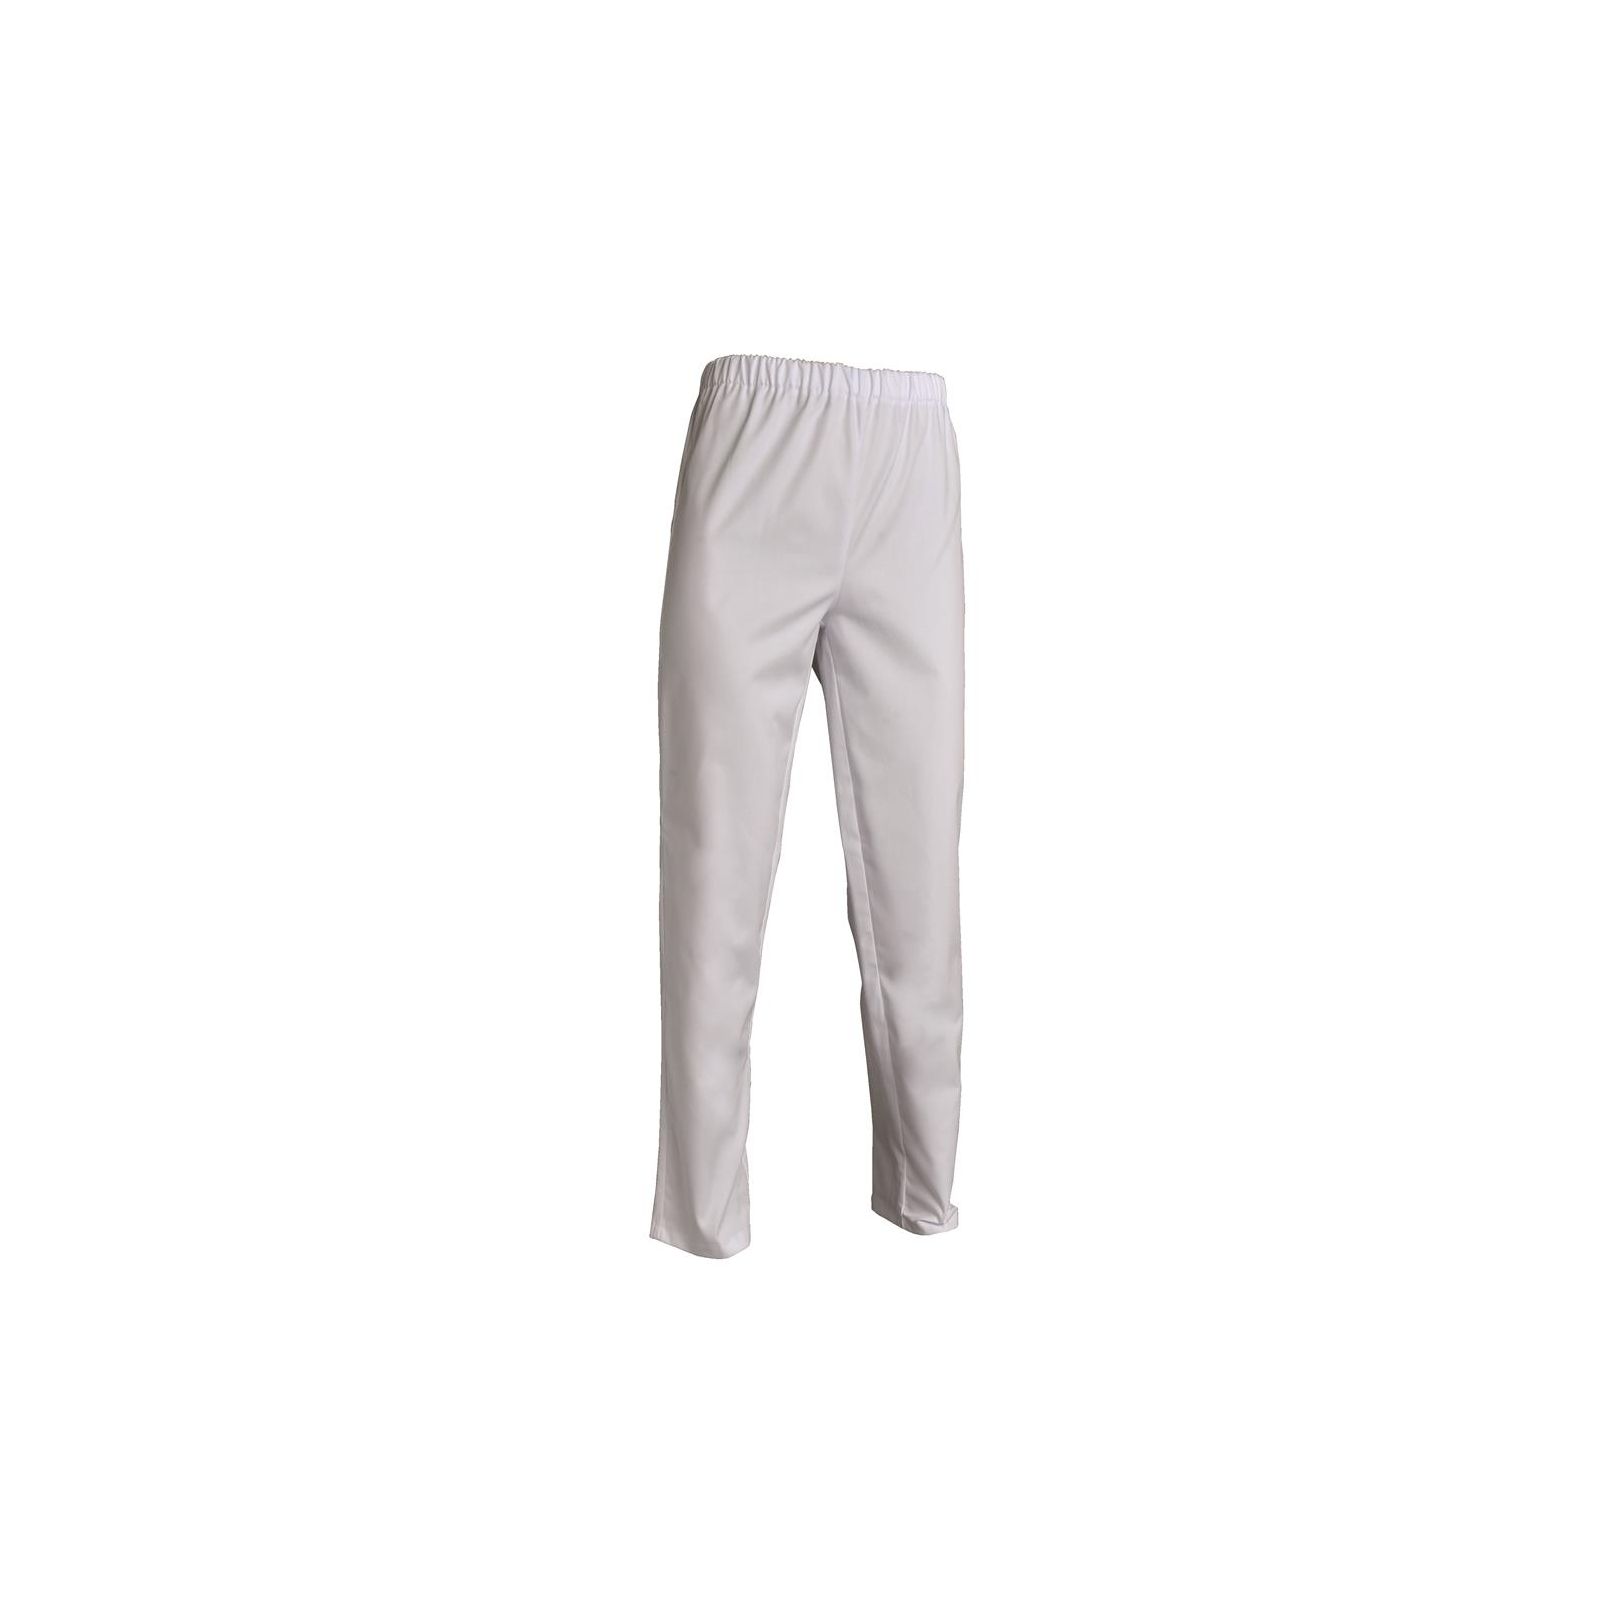 Pantalon médical blanc Poly/Coton Unisexe, SNV (ADLX00000) couleur blanc poly/coton face